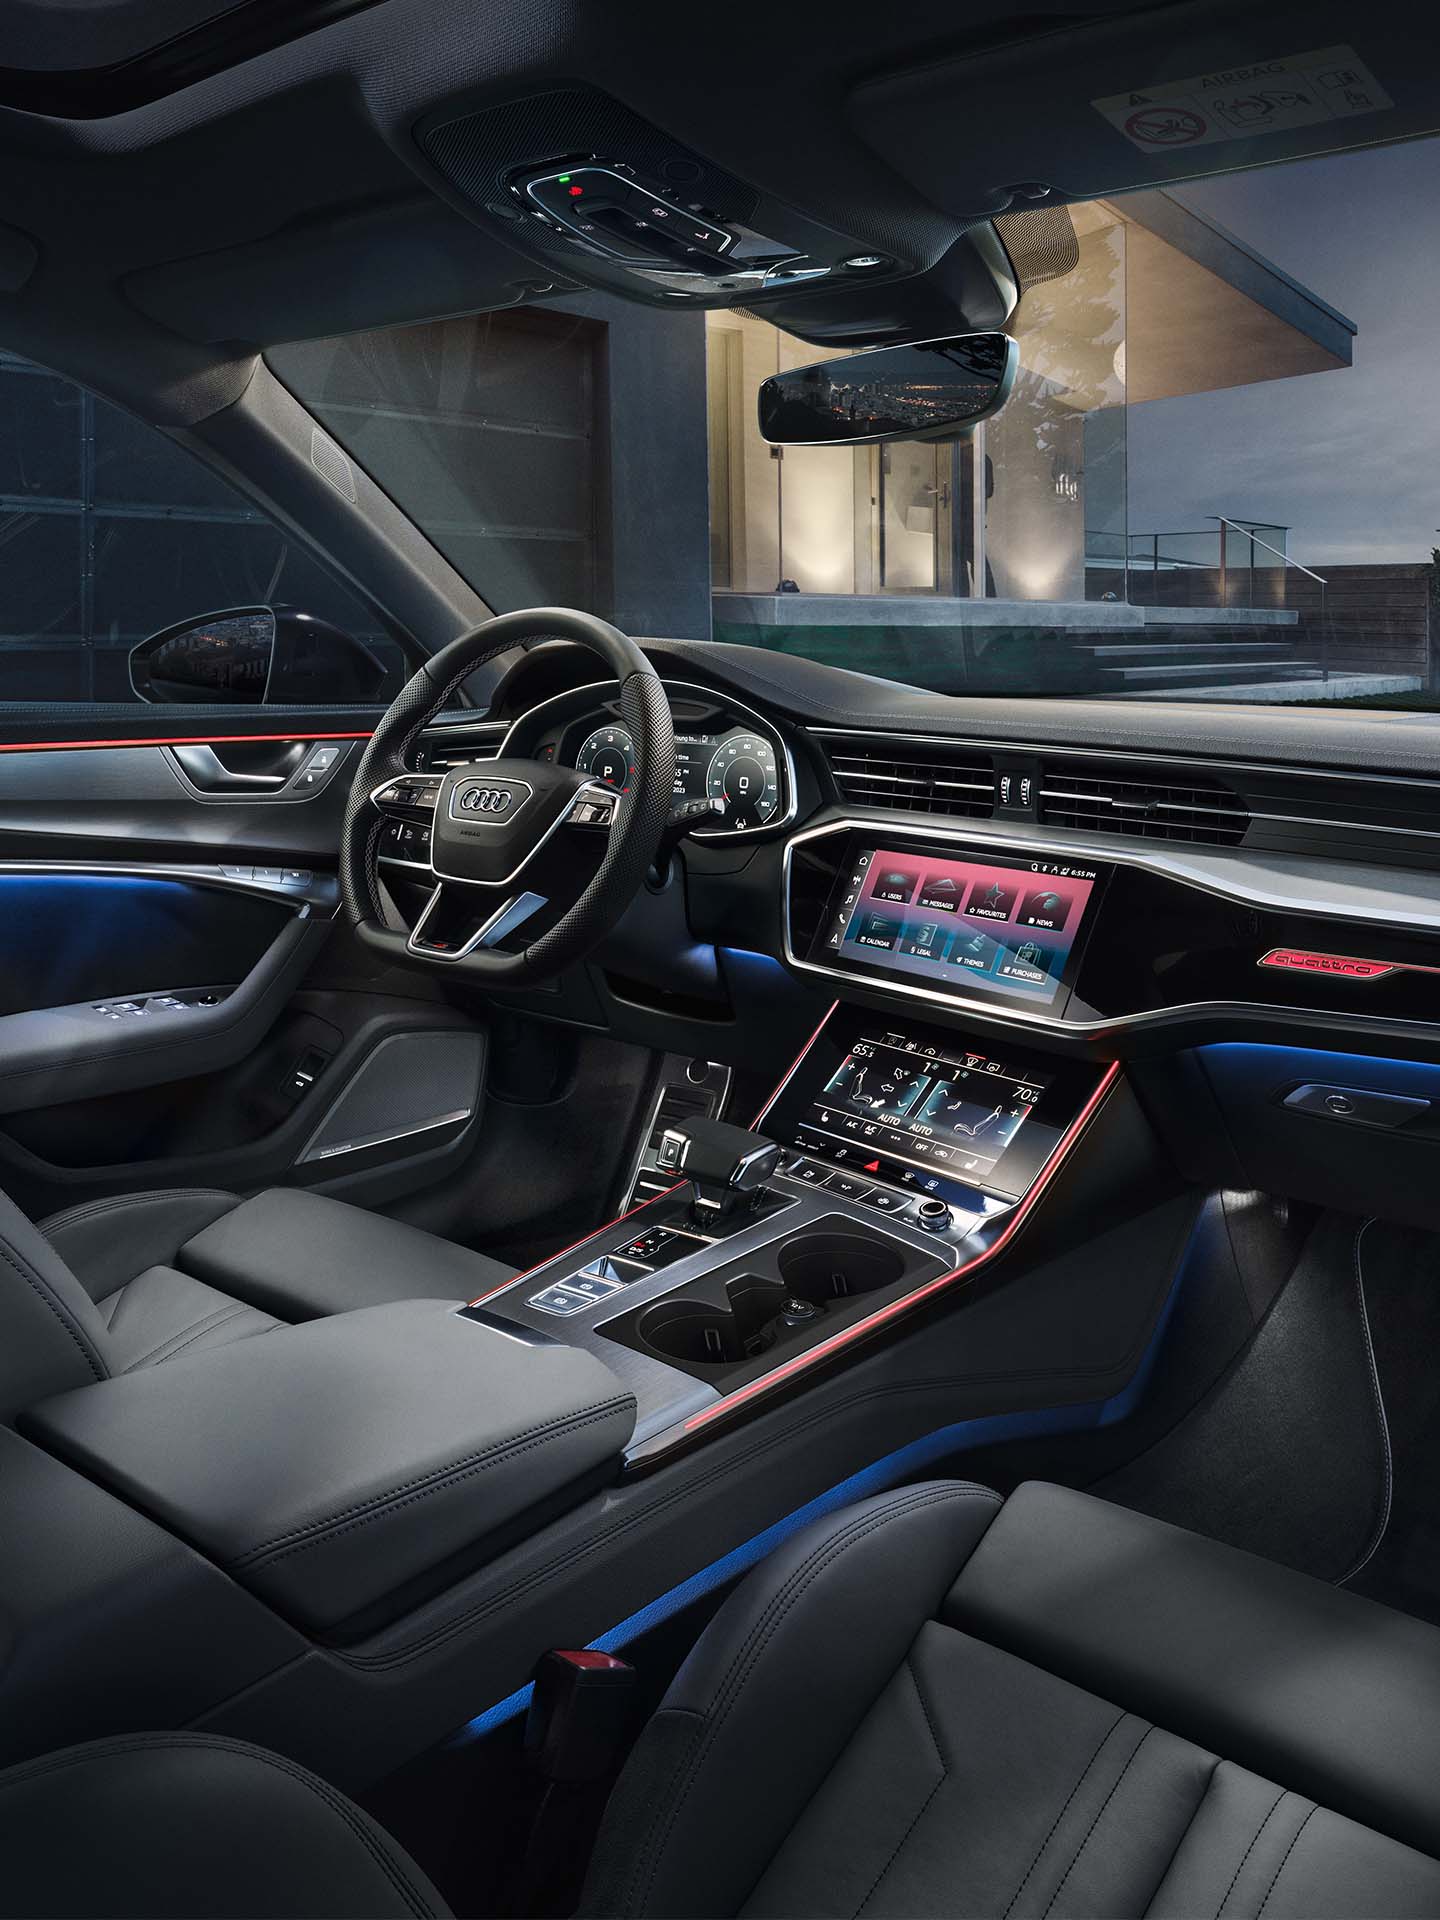 Thematically illuminated Audi cockpit